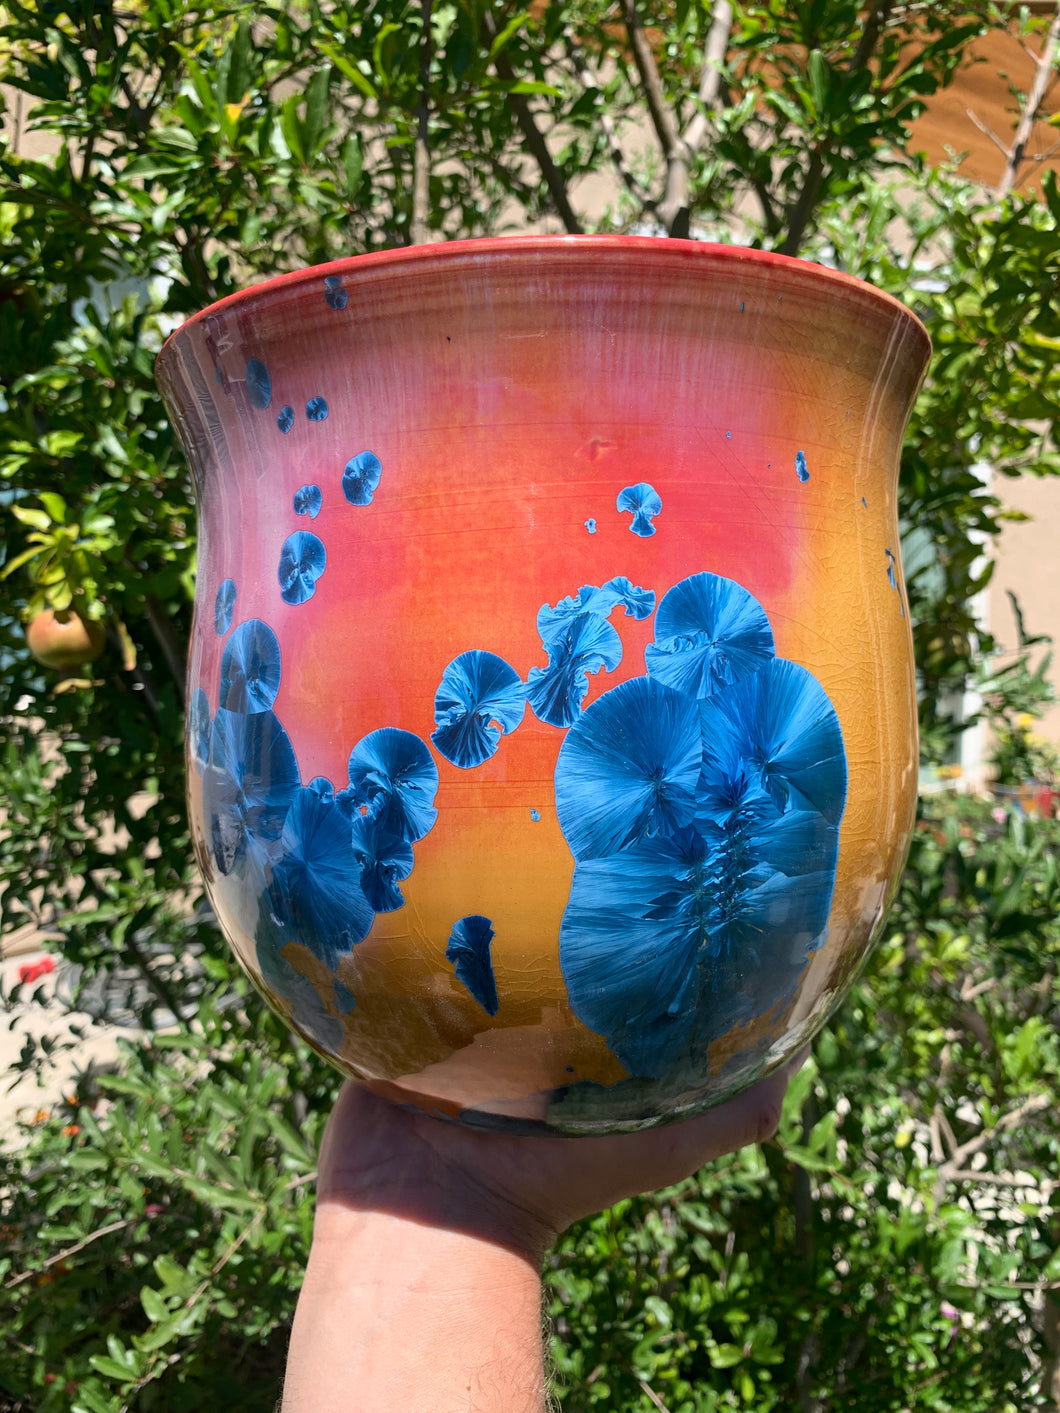 Ceramic Plant Pot Handmade Crystalline Glazed Large Planter